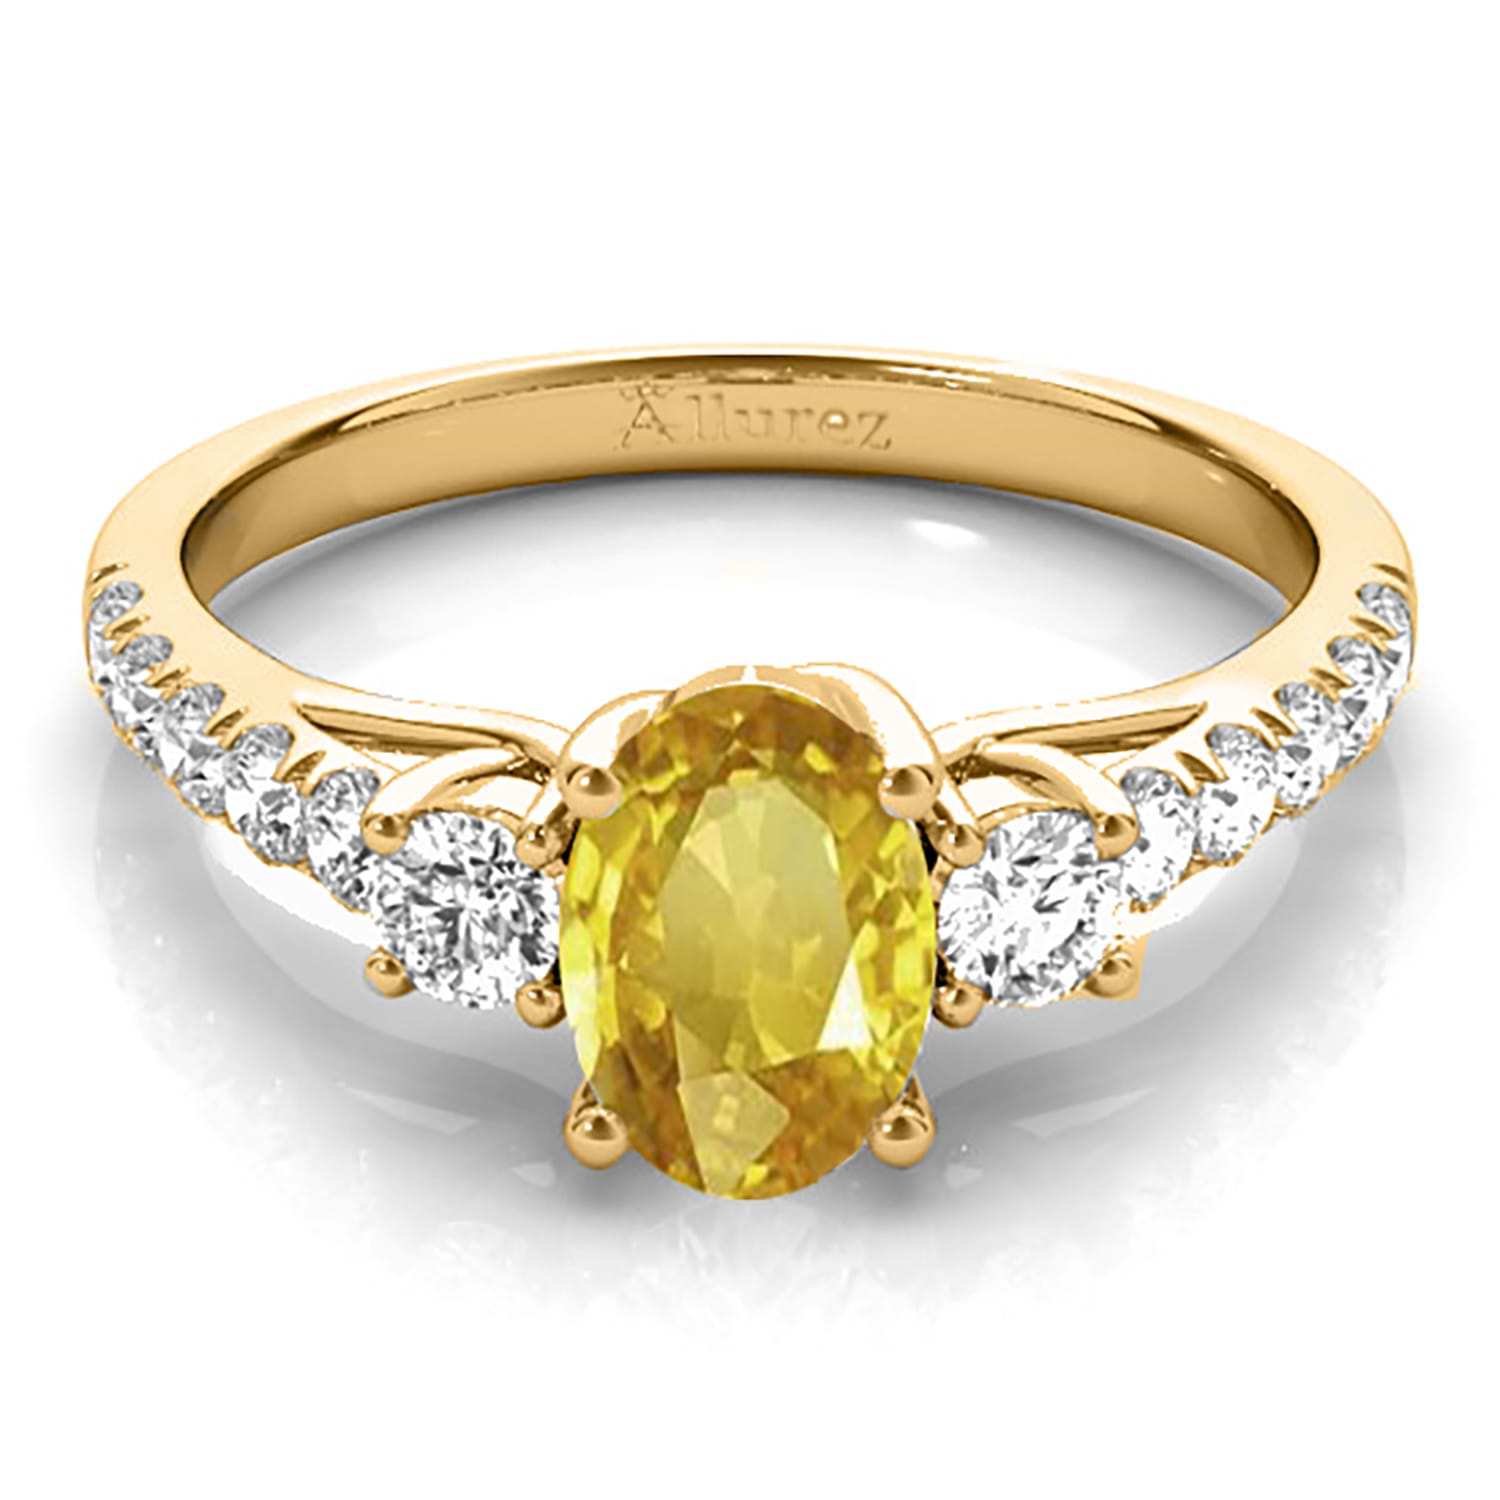 Oval Cut Yellow Sapphire & Diamond Engagement Ring 14k Yellow Gold (1.40ct)